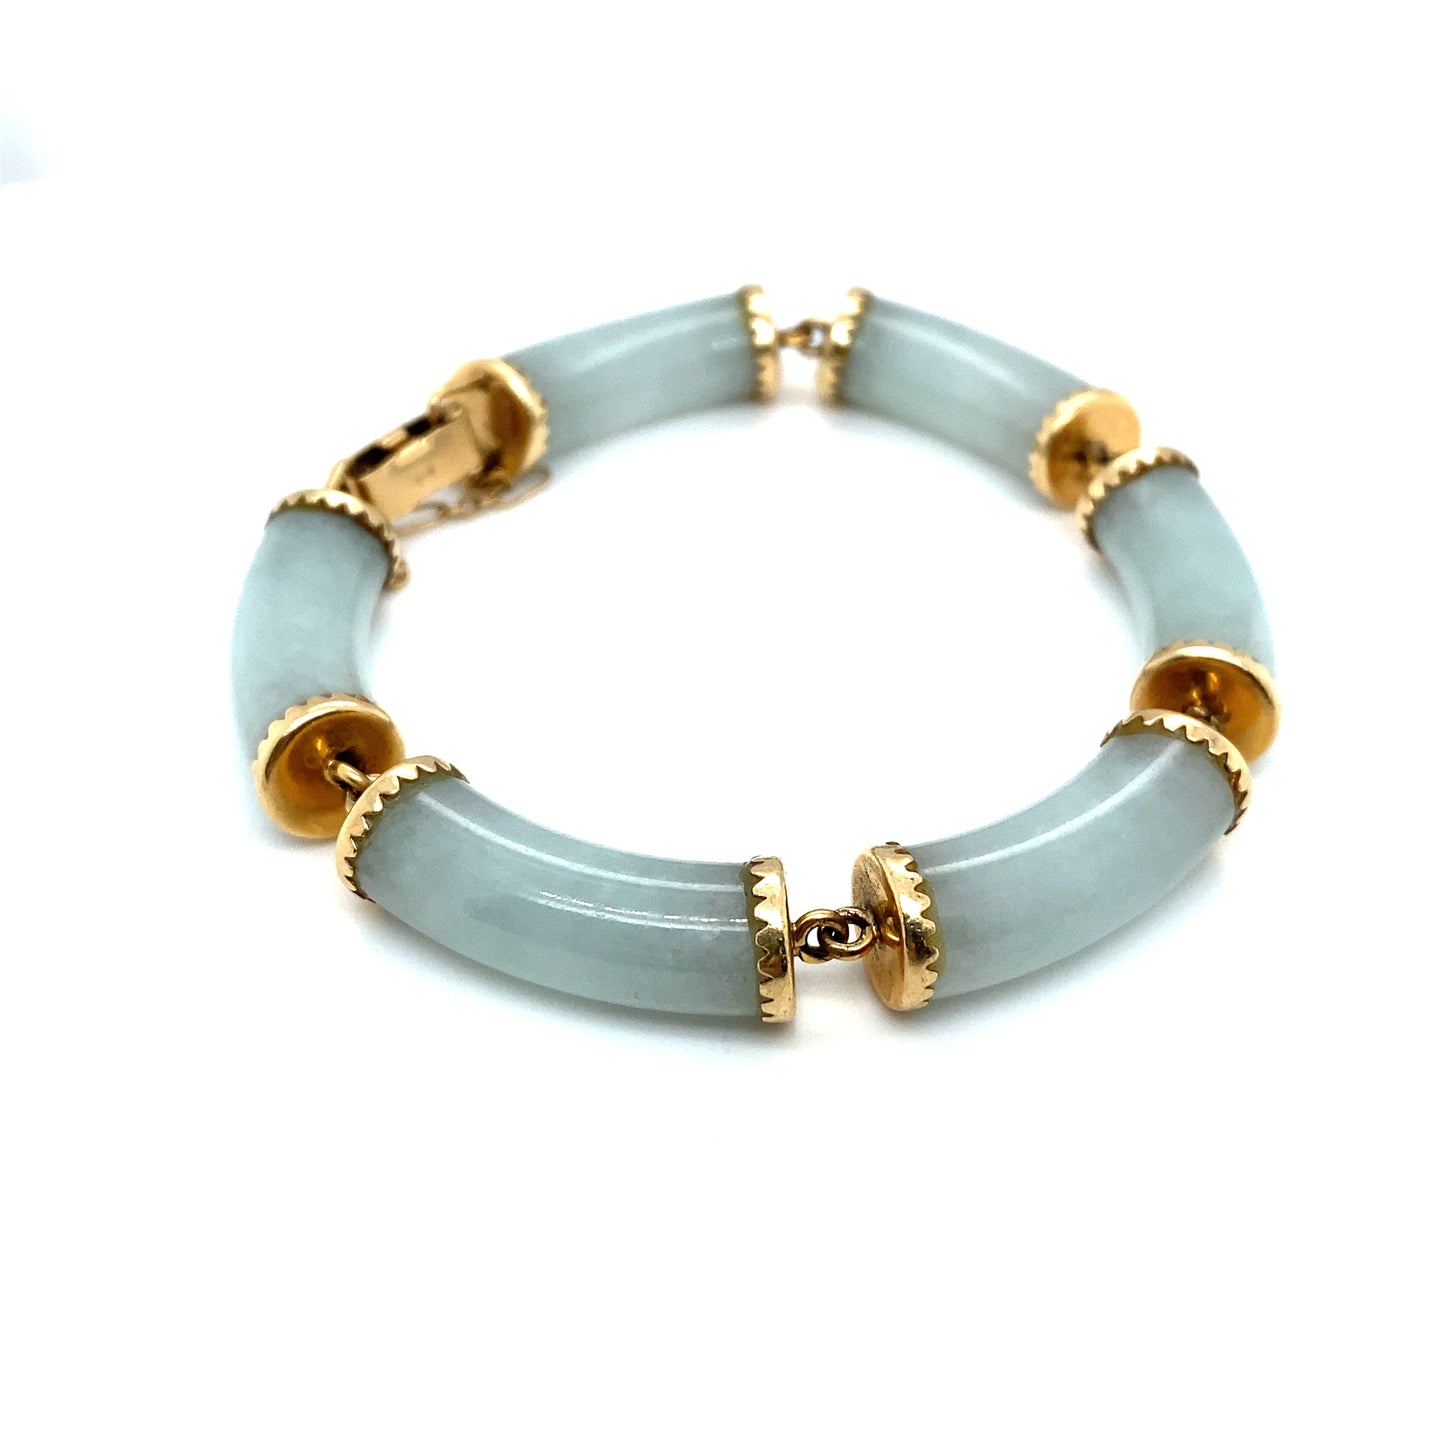 Circa 1980s Chinese White Jade Bar Link Bracelet in 14K Gold